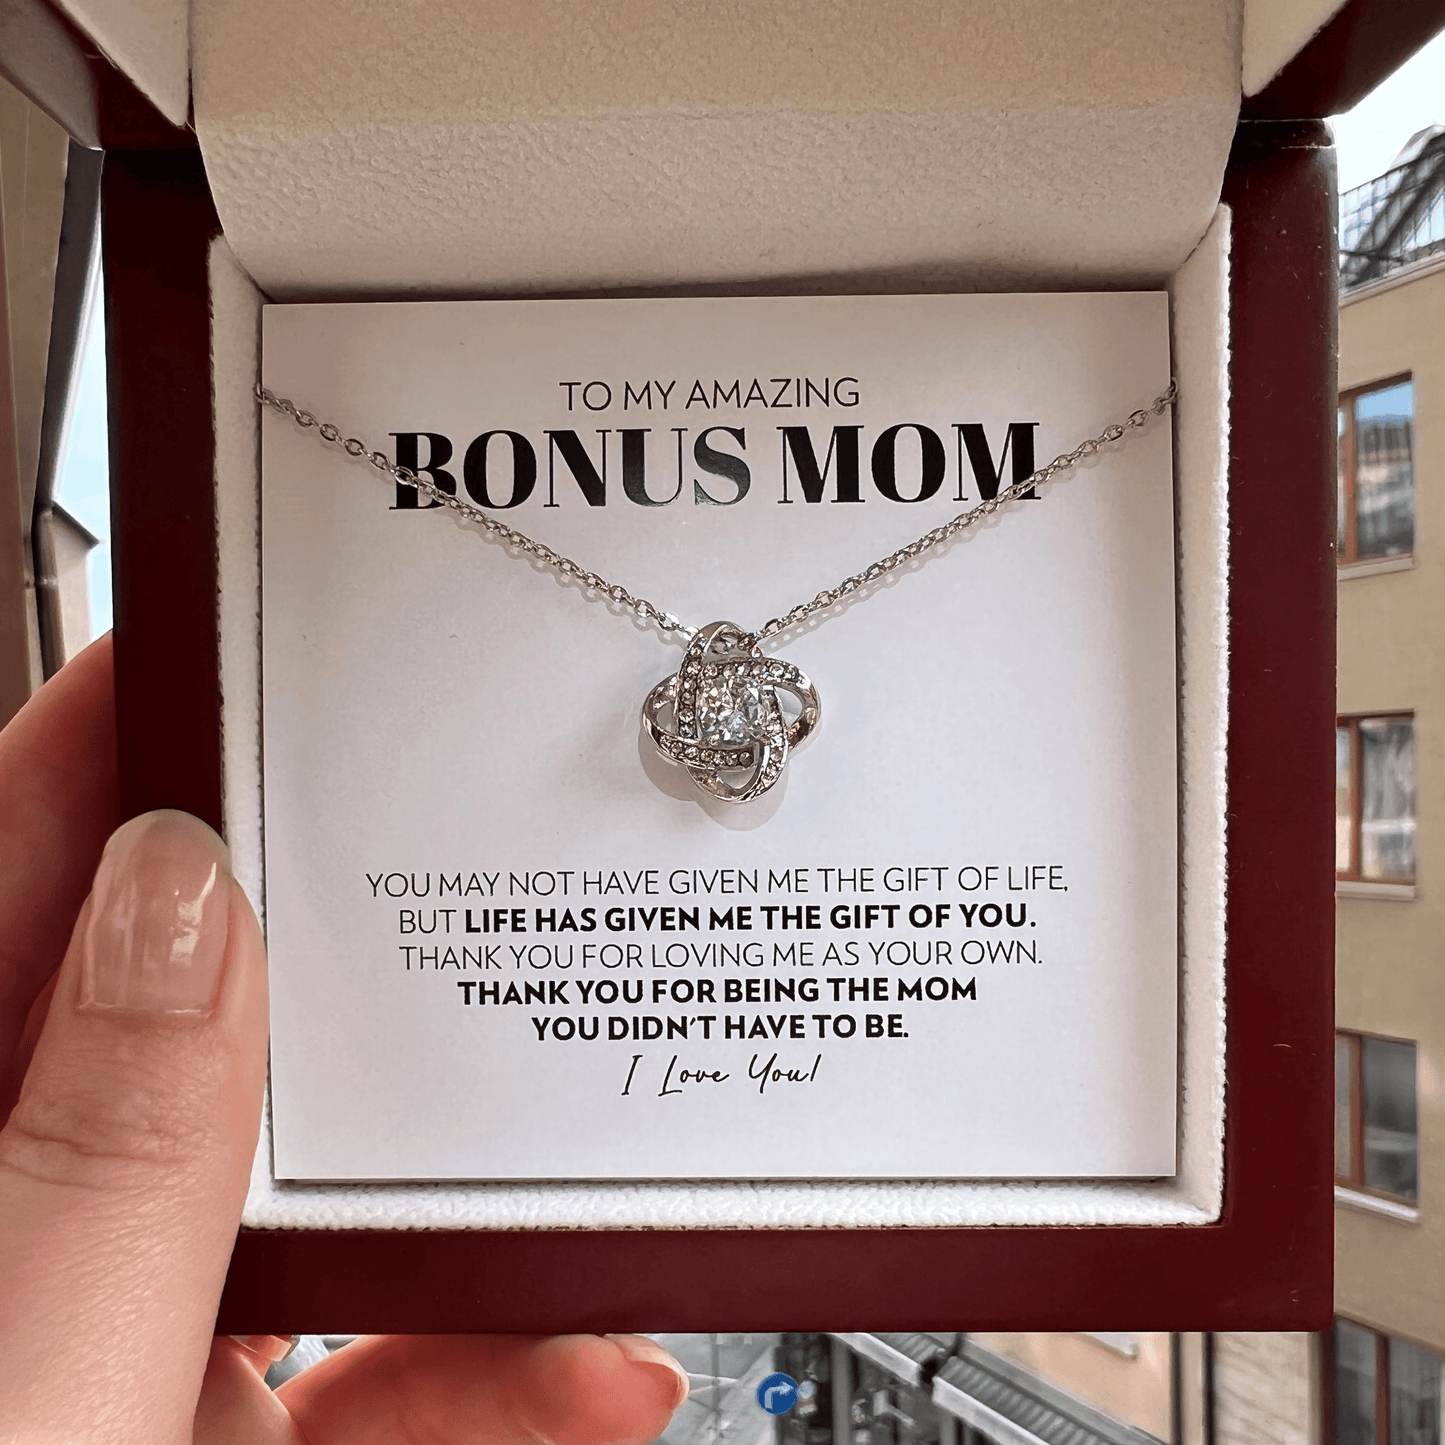 Bonus Mom - Thank You - Love Knot Necklace